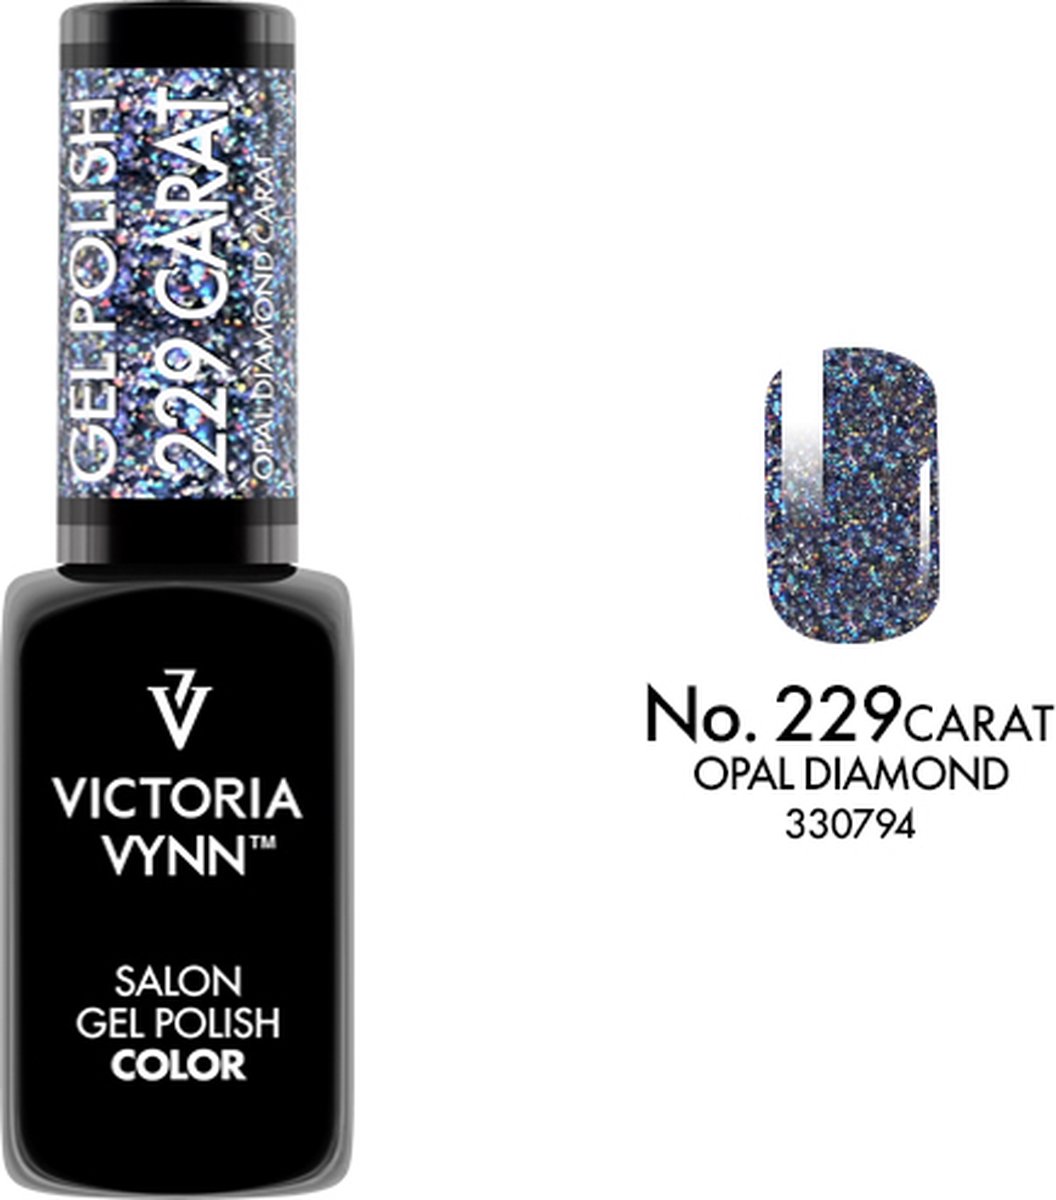 Victoria Vynn – Salon Gelpolish 229 Carat Opal Diamond - paars / blauw glitter gel polish - gellak - lak - glitters - nagels - nagelverzorging - nagelstyliste - uv / led - nagelstylist - callance